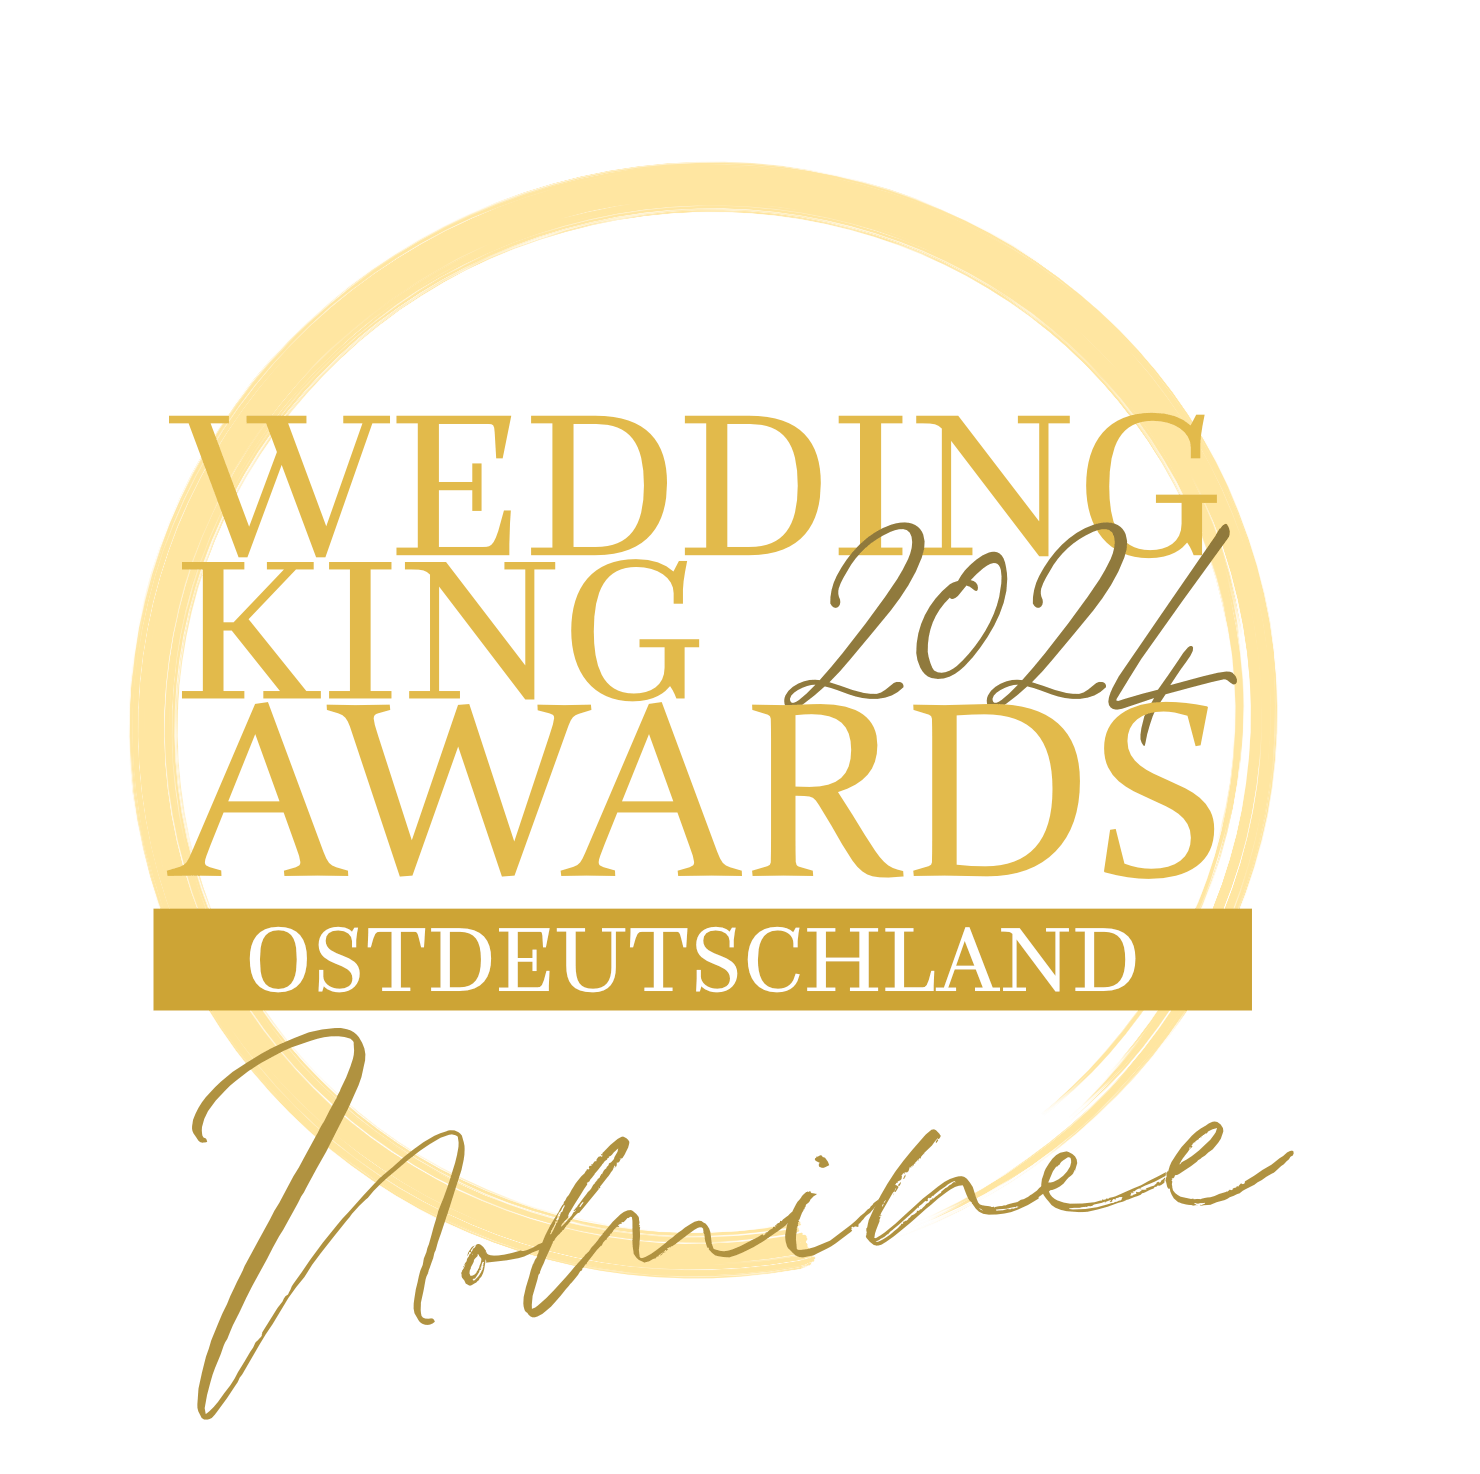 wedding king awards beste fotografin ostdeutschland